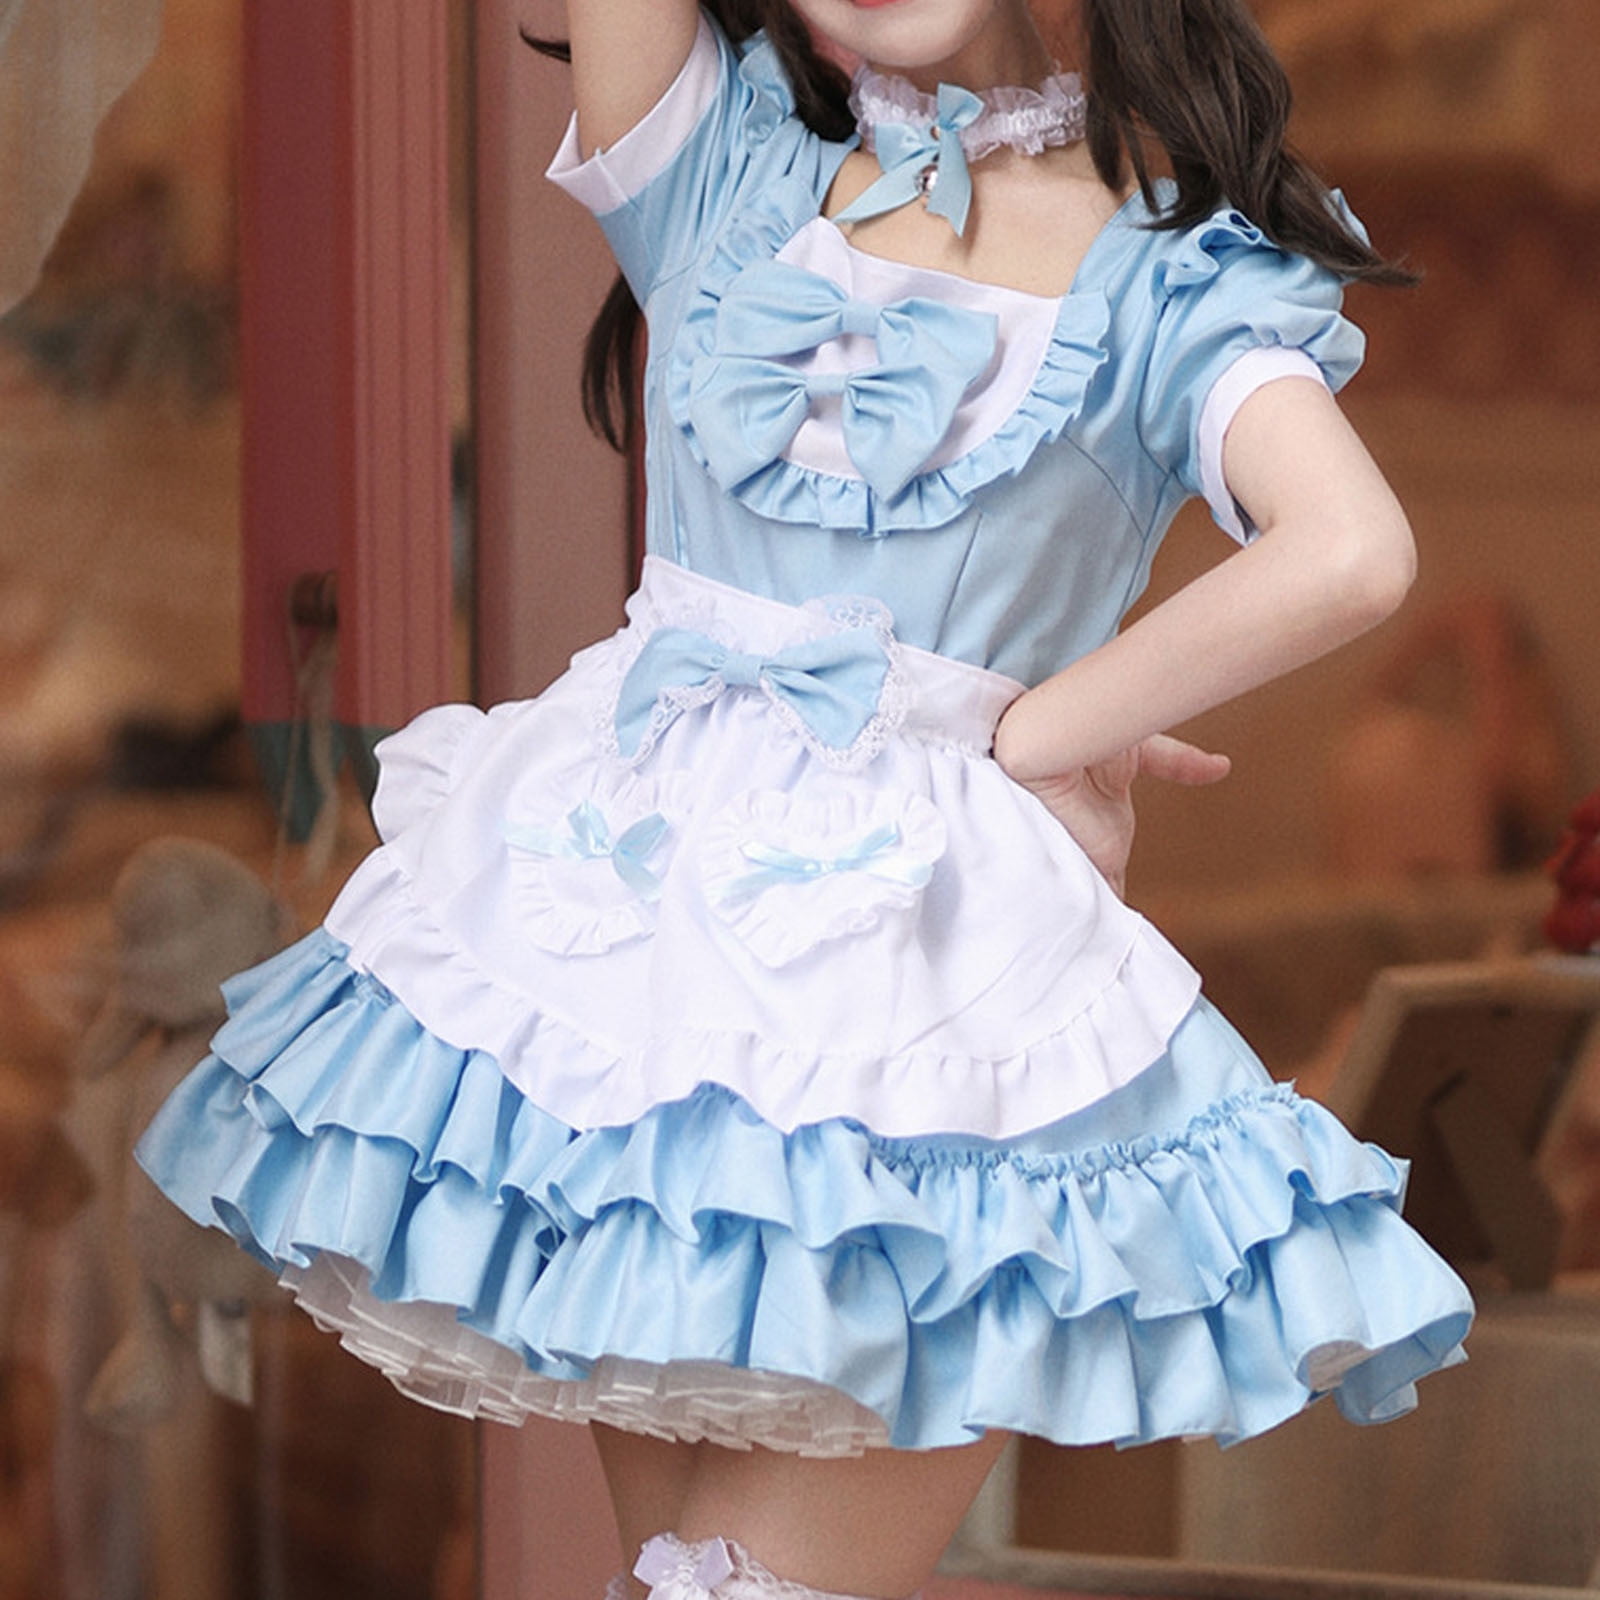 maid uniform dress